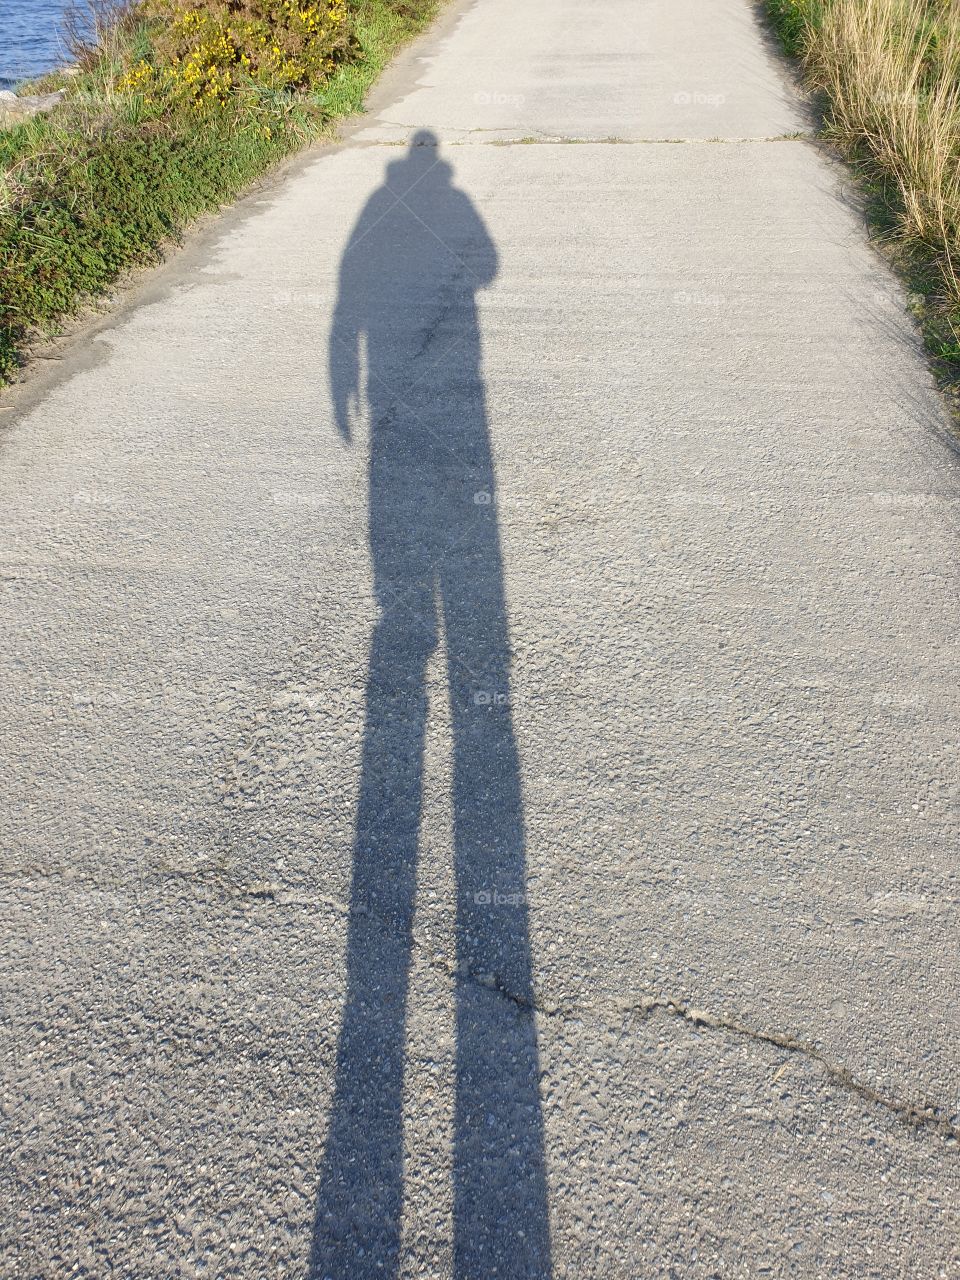 Man's shadow on a side road near the beach